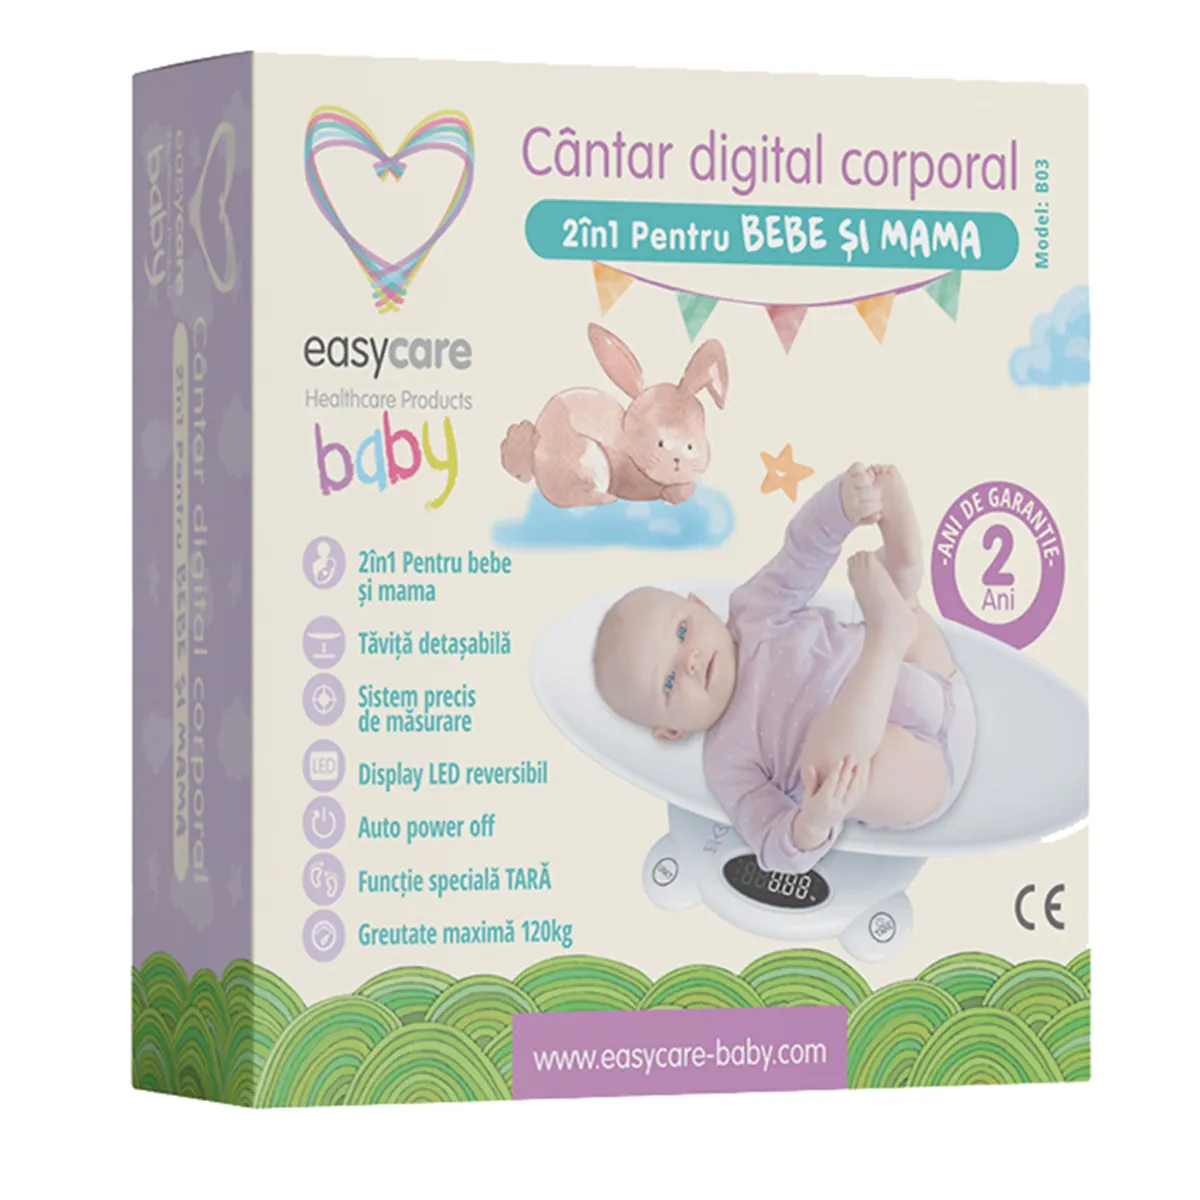 Cantar digital corporal 2in1 pentru bebe si mama 120kg, 1 bucata, EasyCare Baby